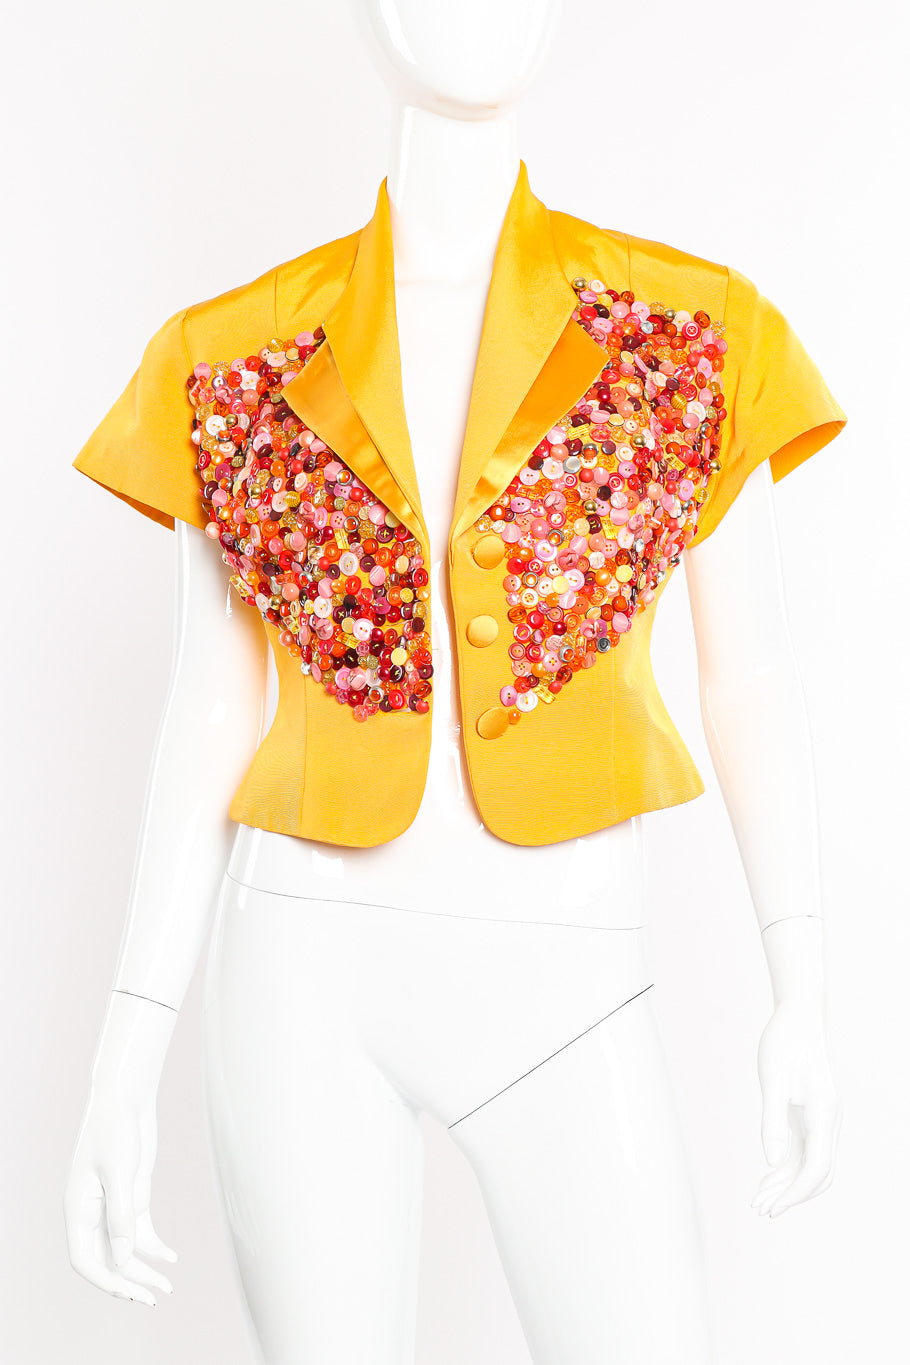 Embellished jacket top by Claude Pétin on mannequin unbuttoned @recessla